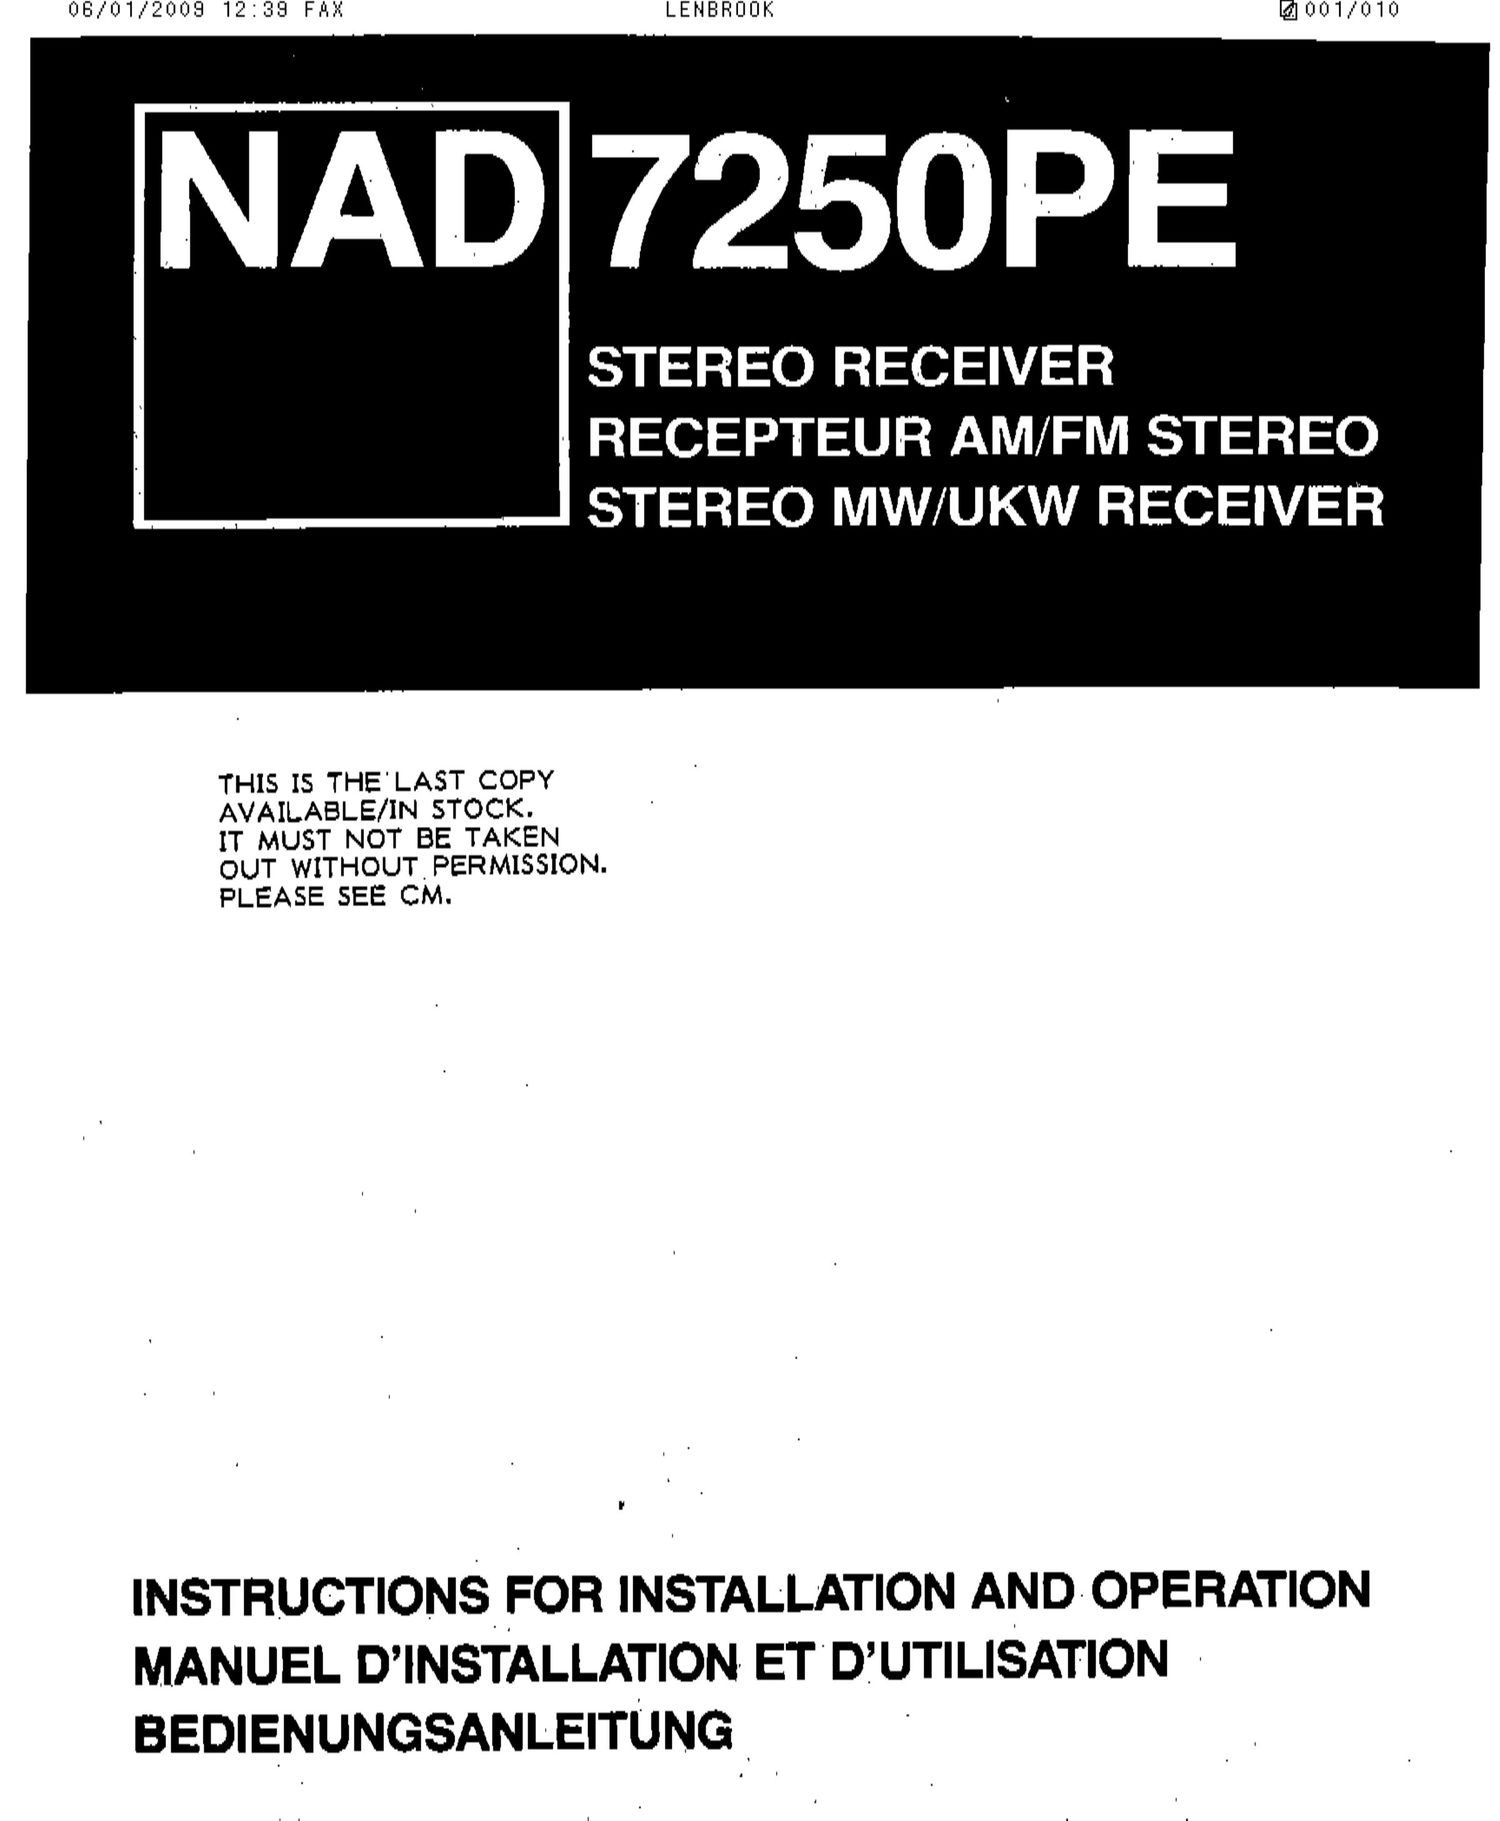 Nad 7250 PE Owners Manual